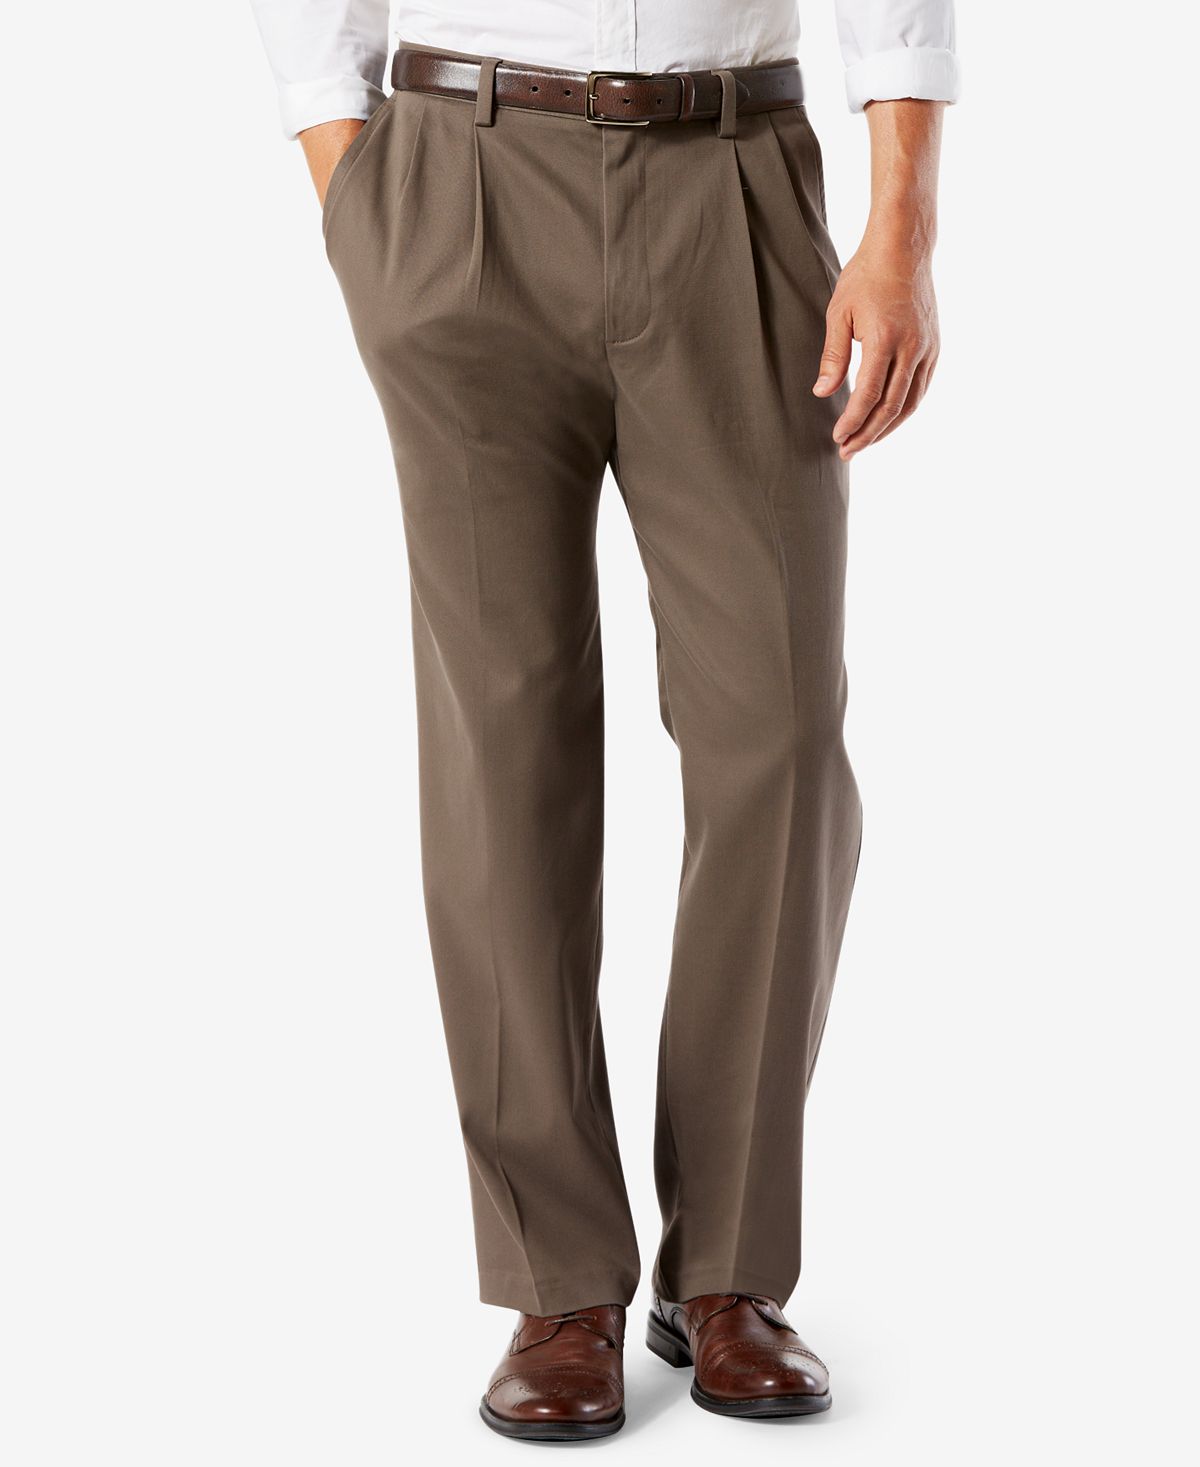 Мужские брюки easy classic со складками цвета хаки стрейч Dockers, мульти